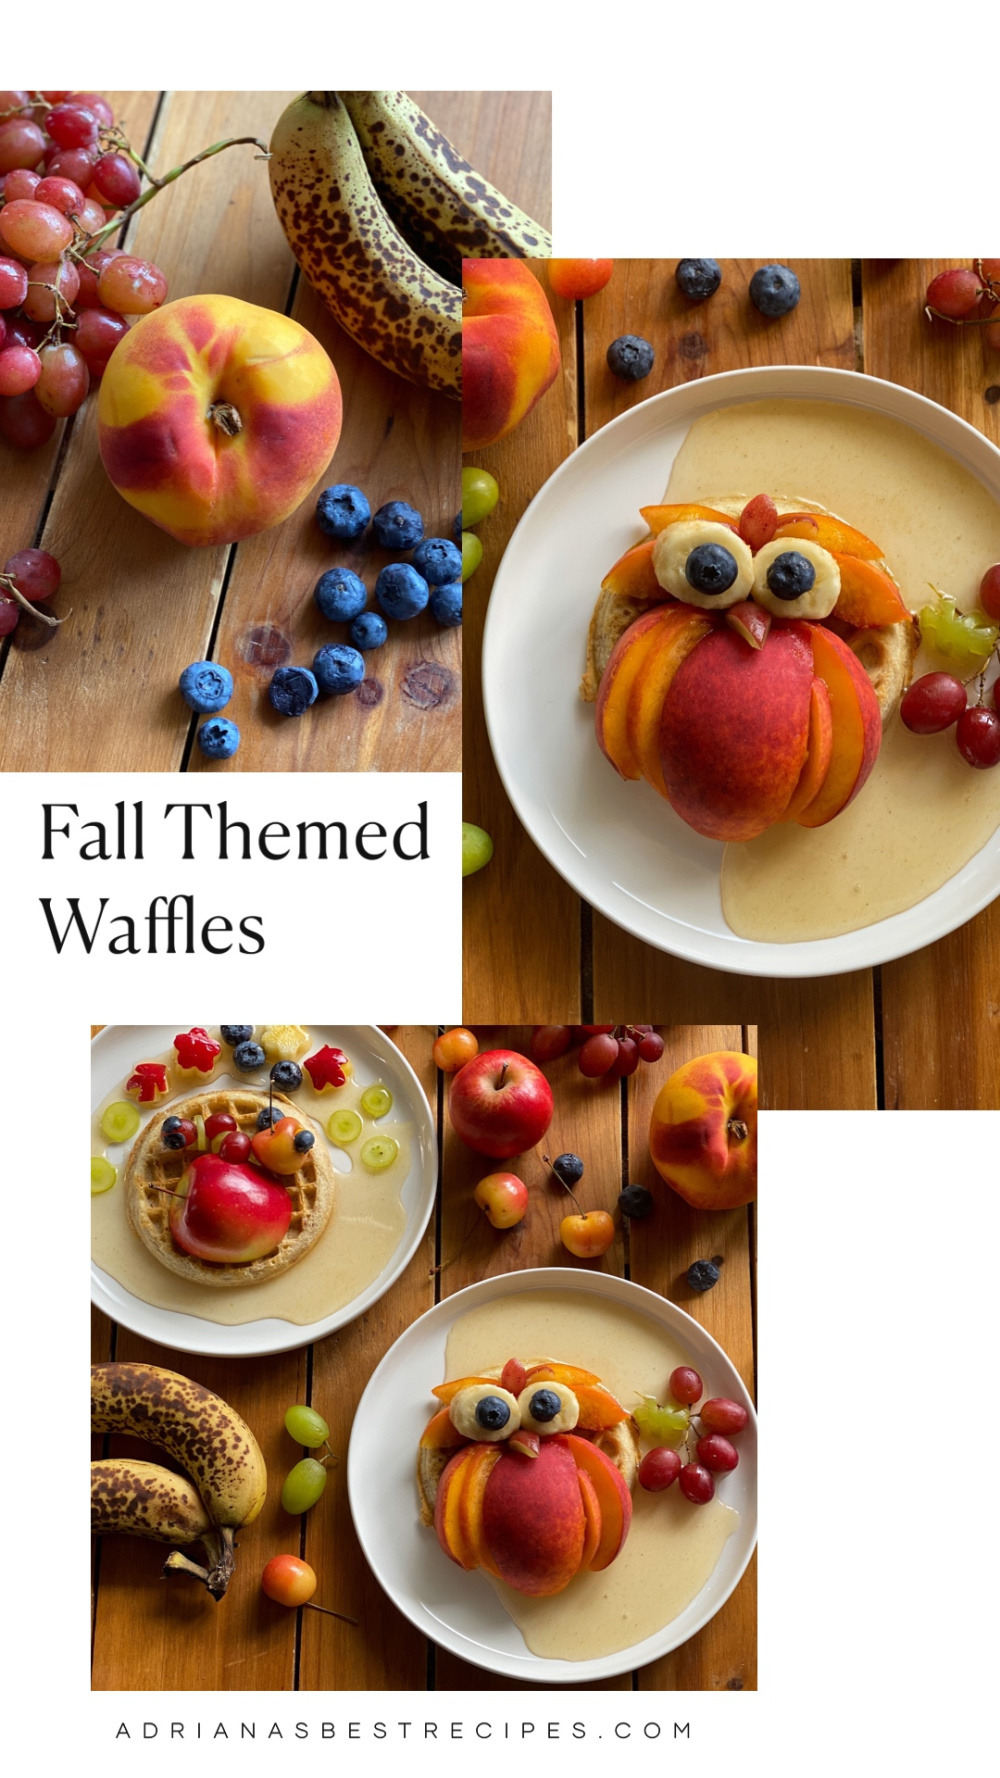 Fall themed waffles with seasonal fruit